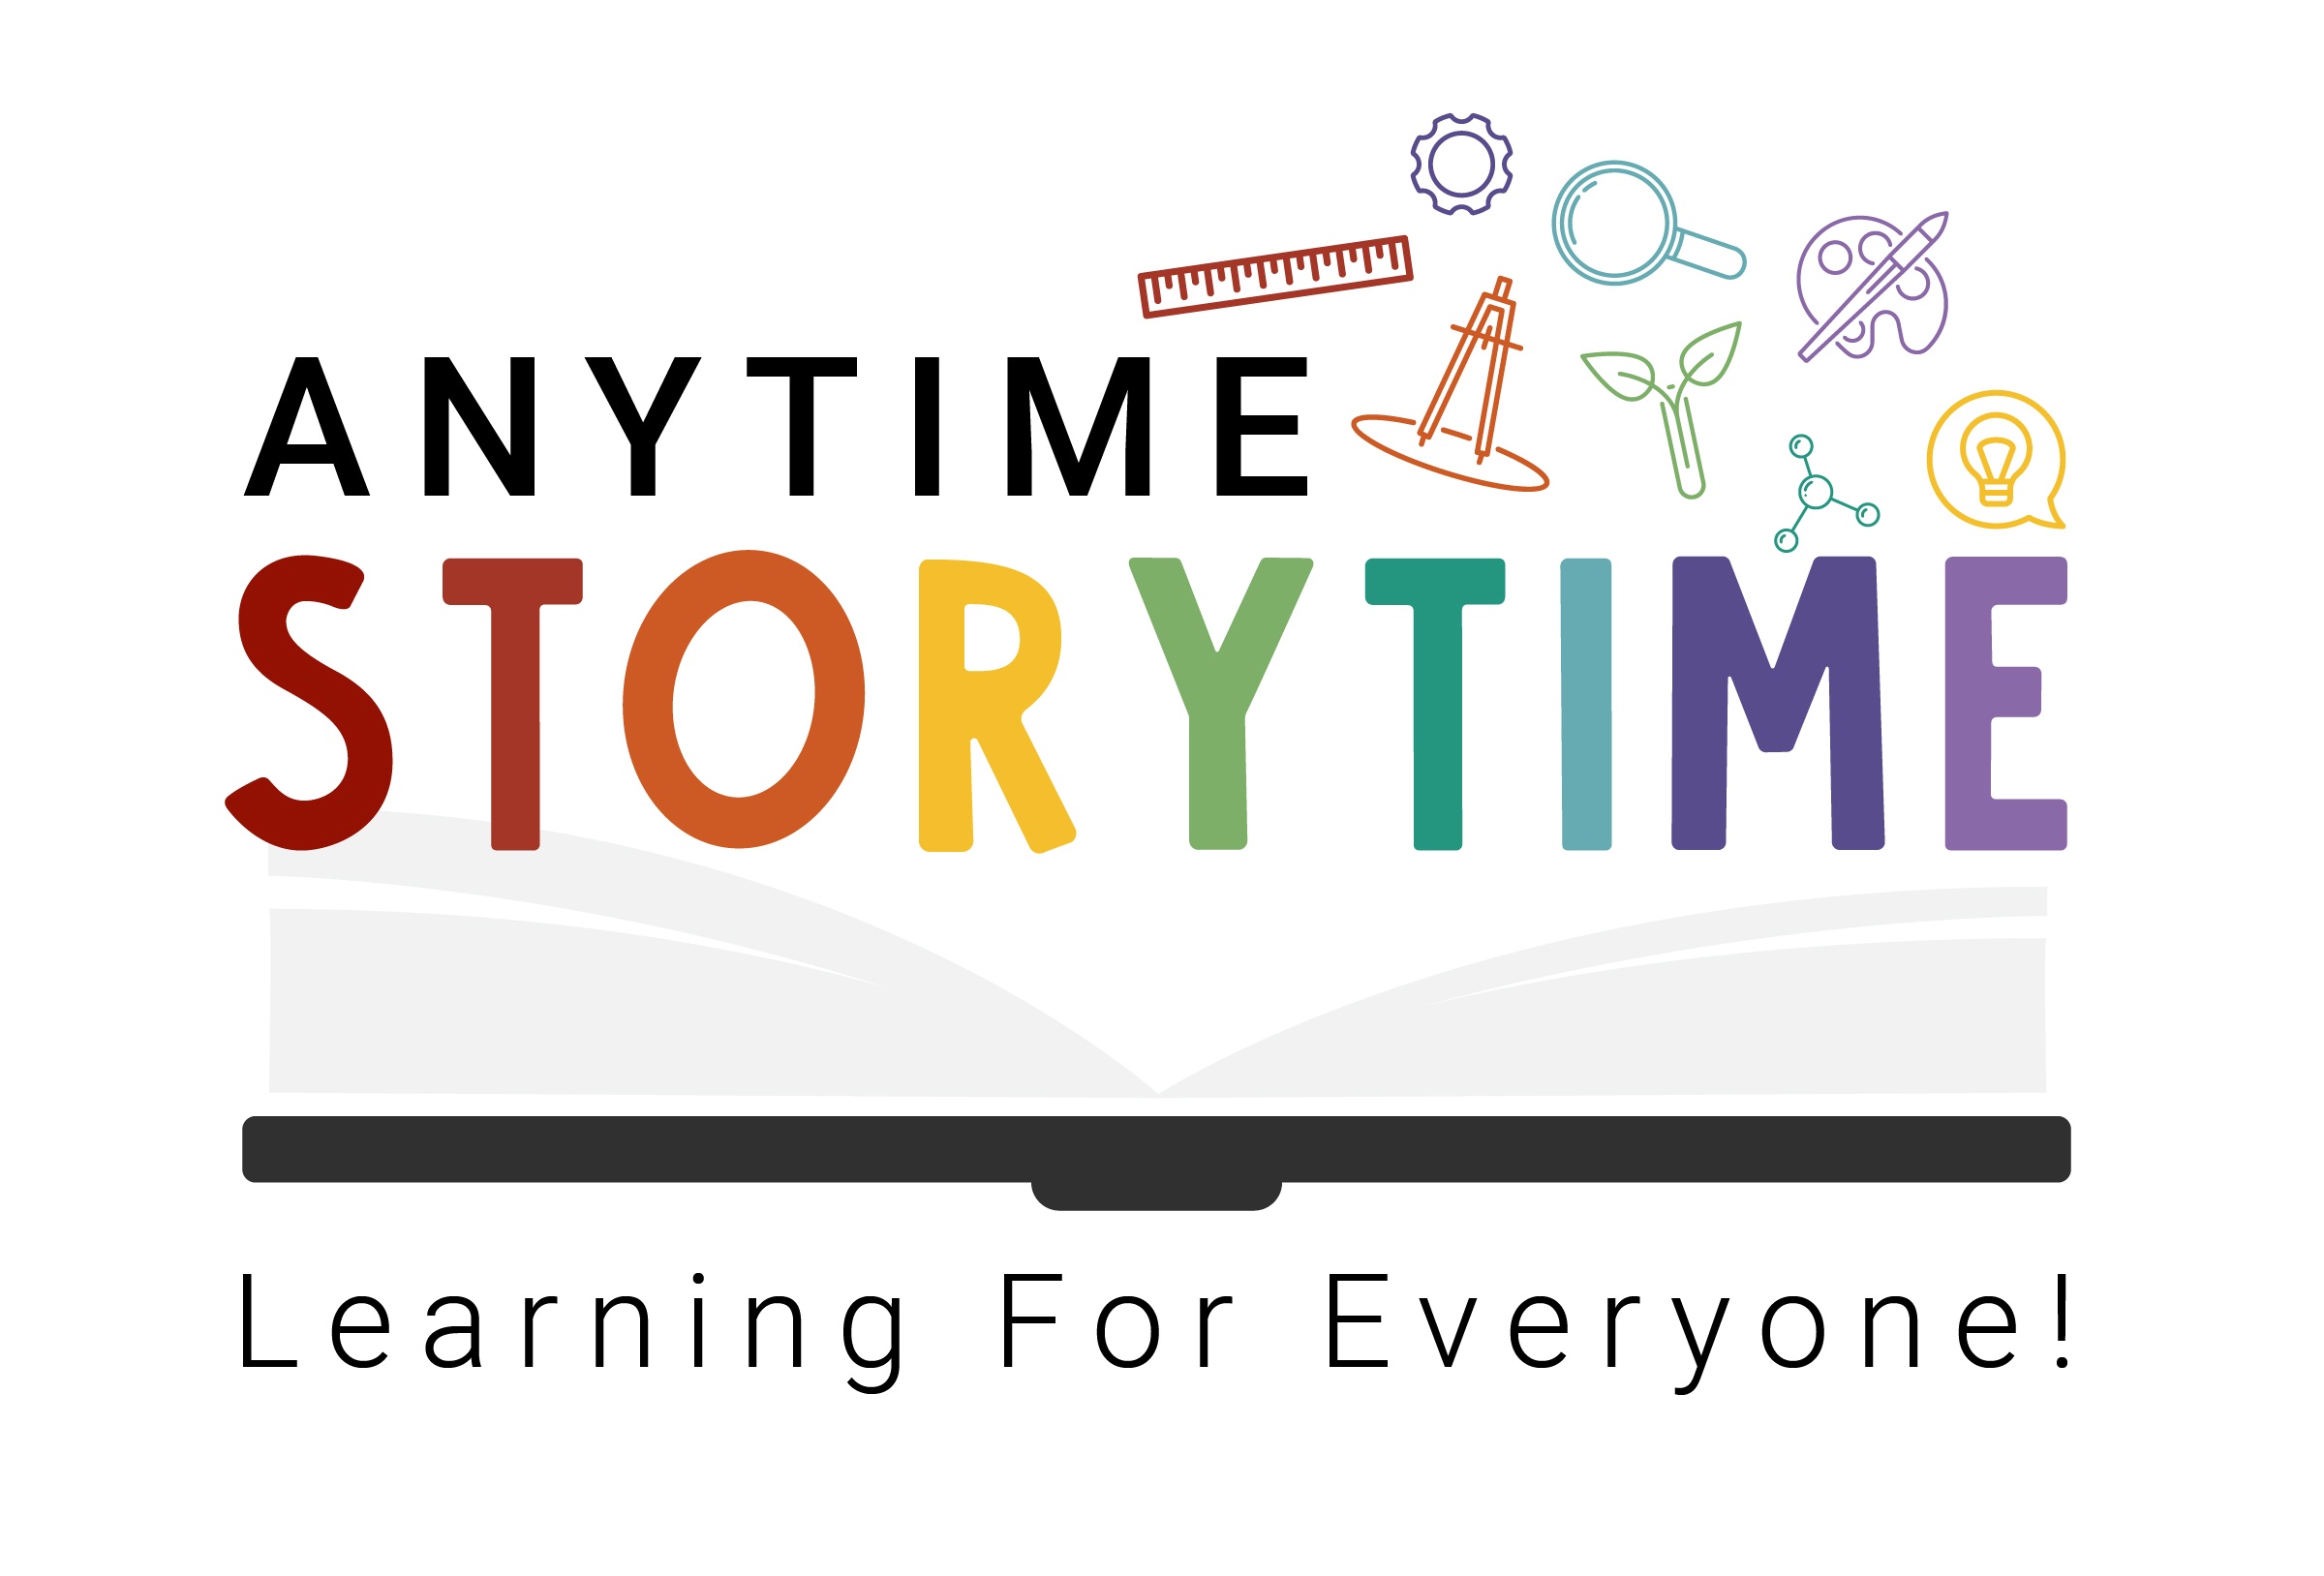 Anytime Storytime logo